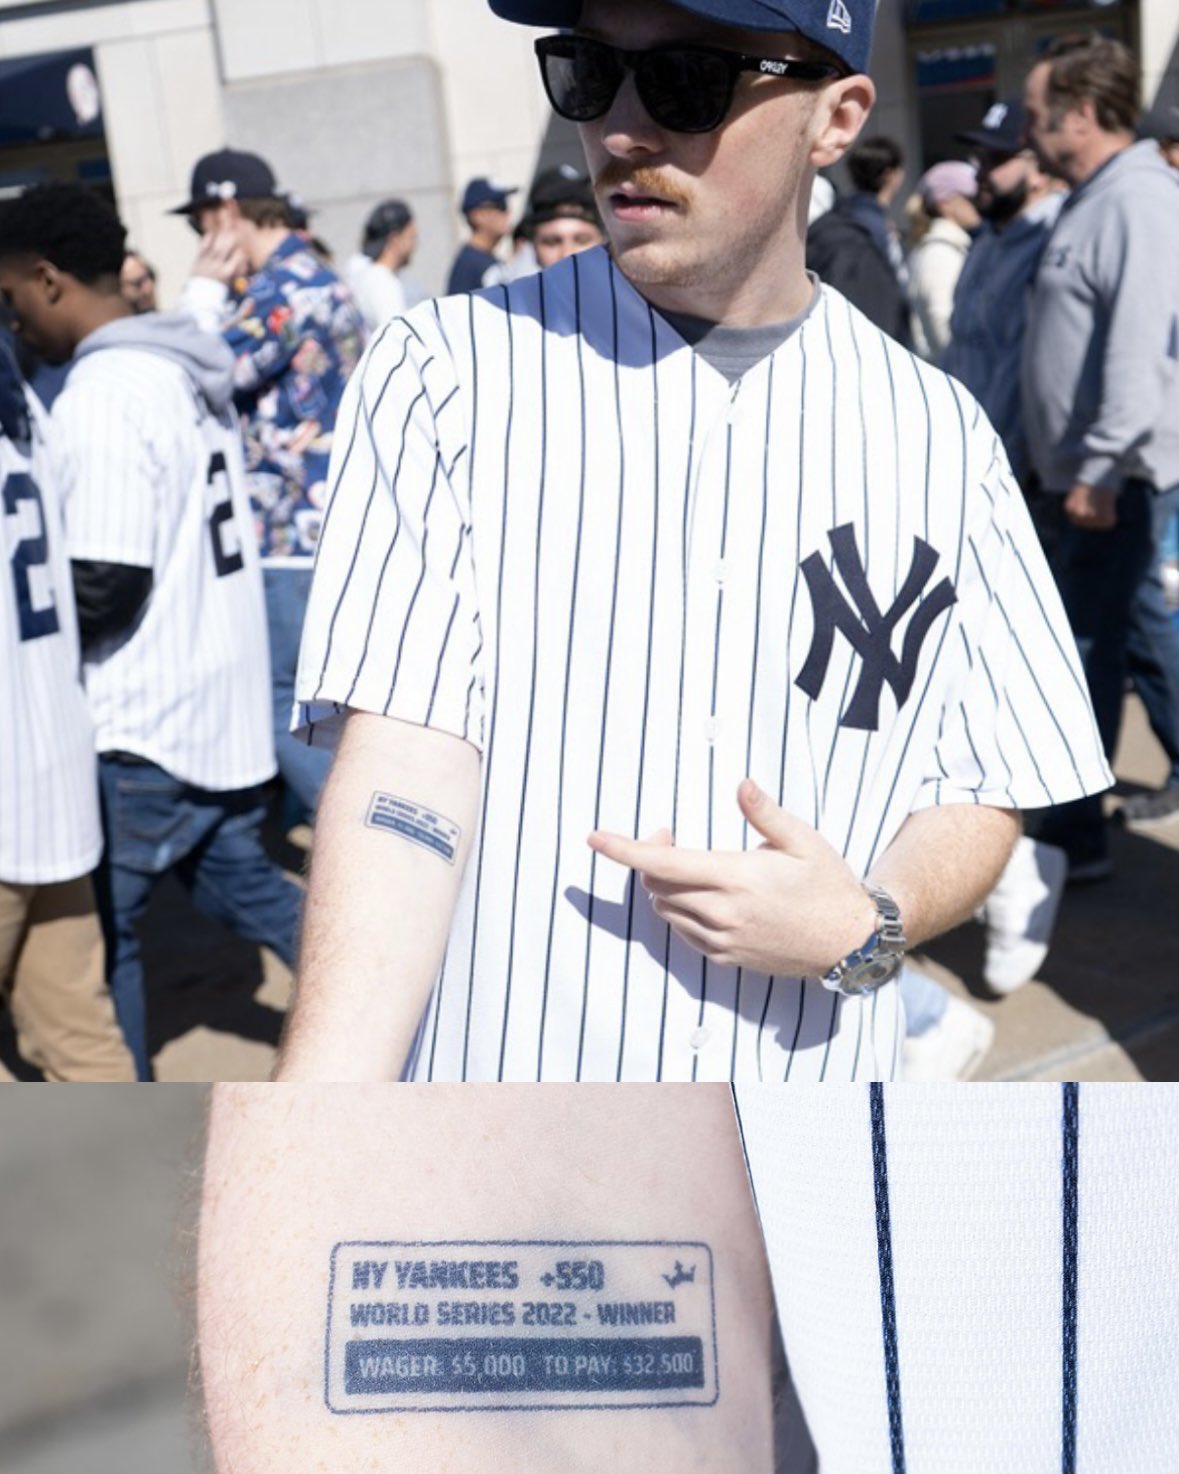 br_betting on X: Bro got his Yankees World Series future tattooed